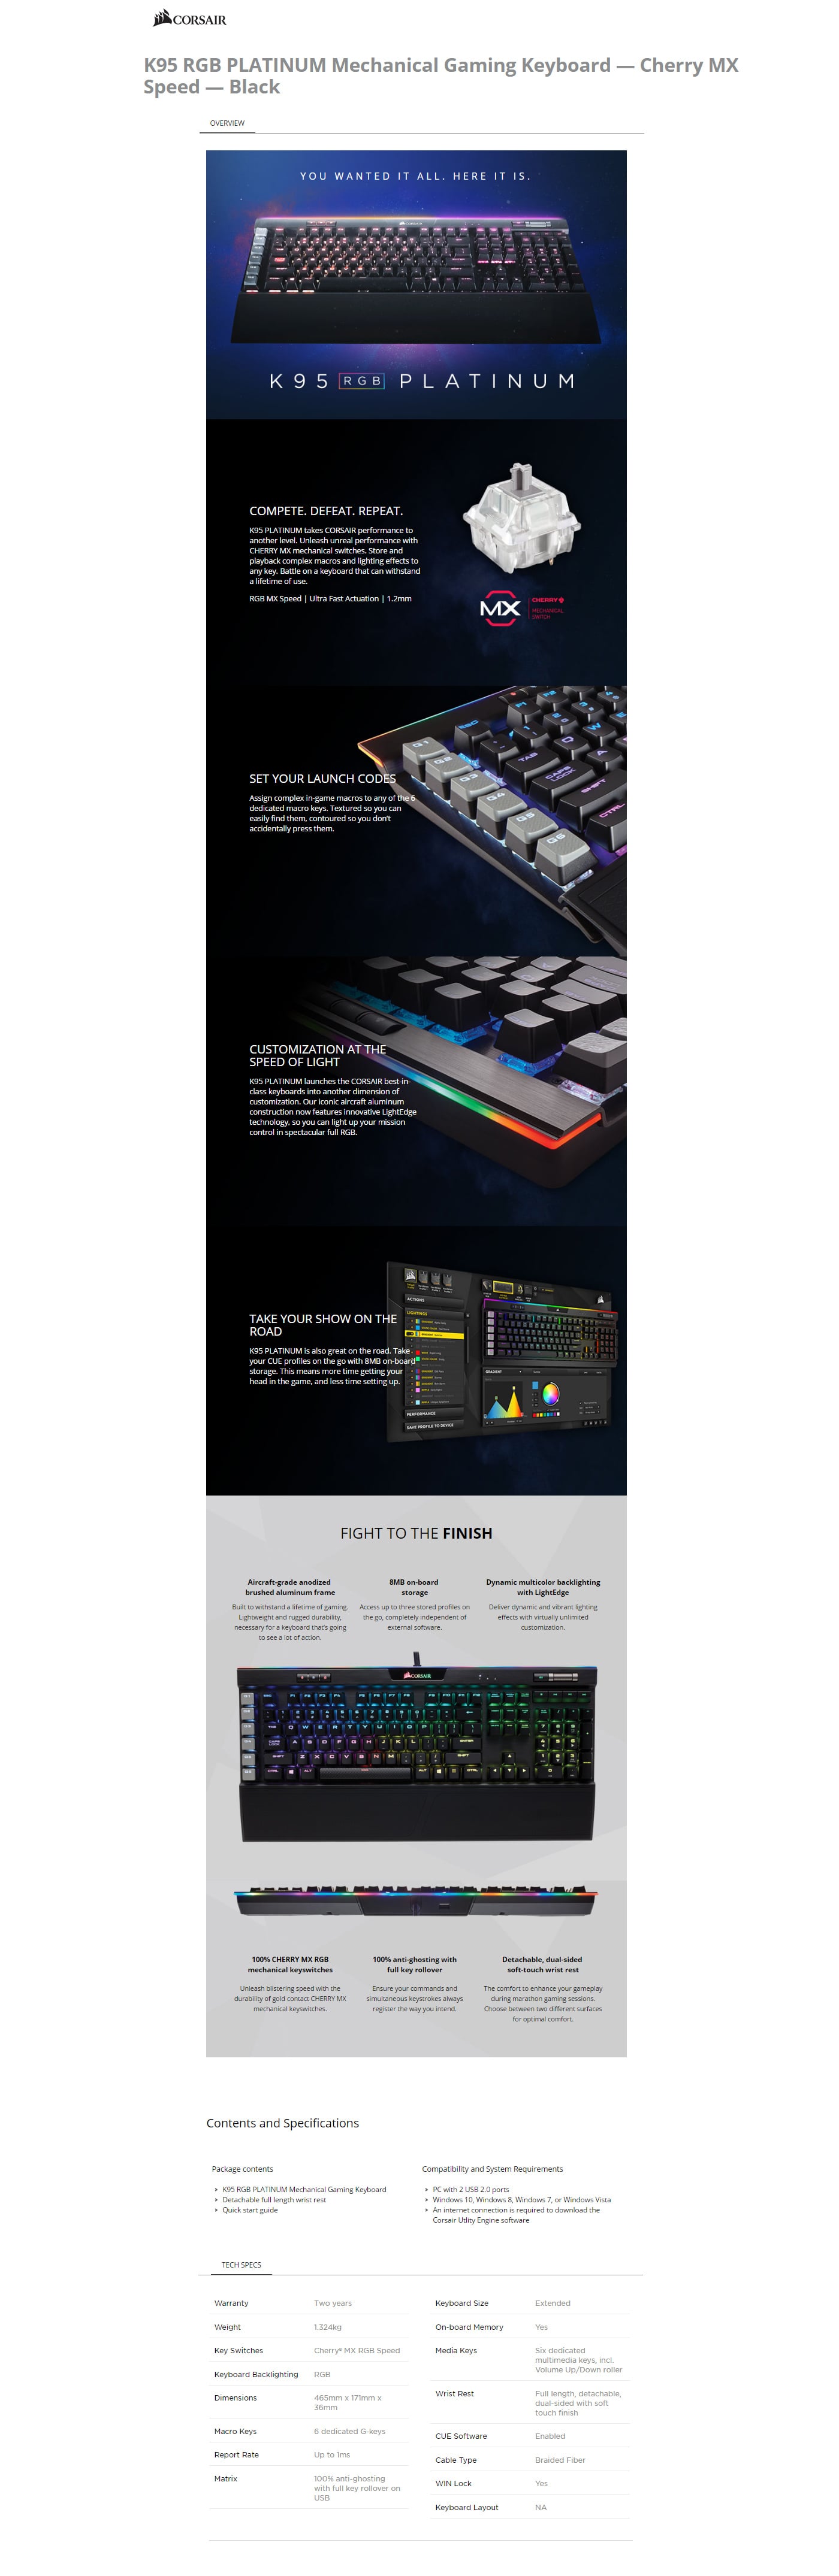 Corsair K95 RGB PLATINUM Mechanical Gaming Keyboard -Cherry MX Speed  Black features